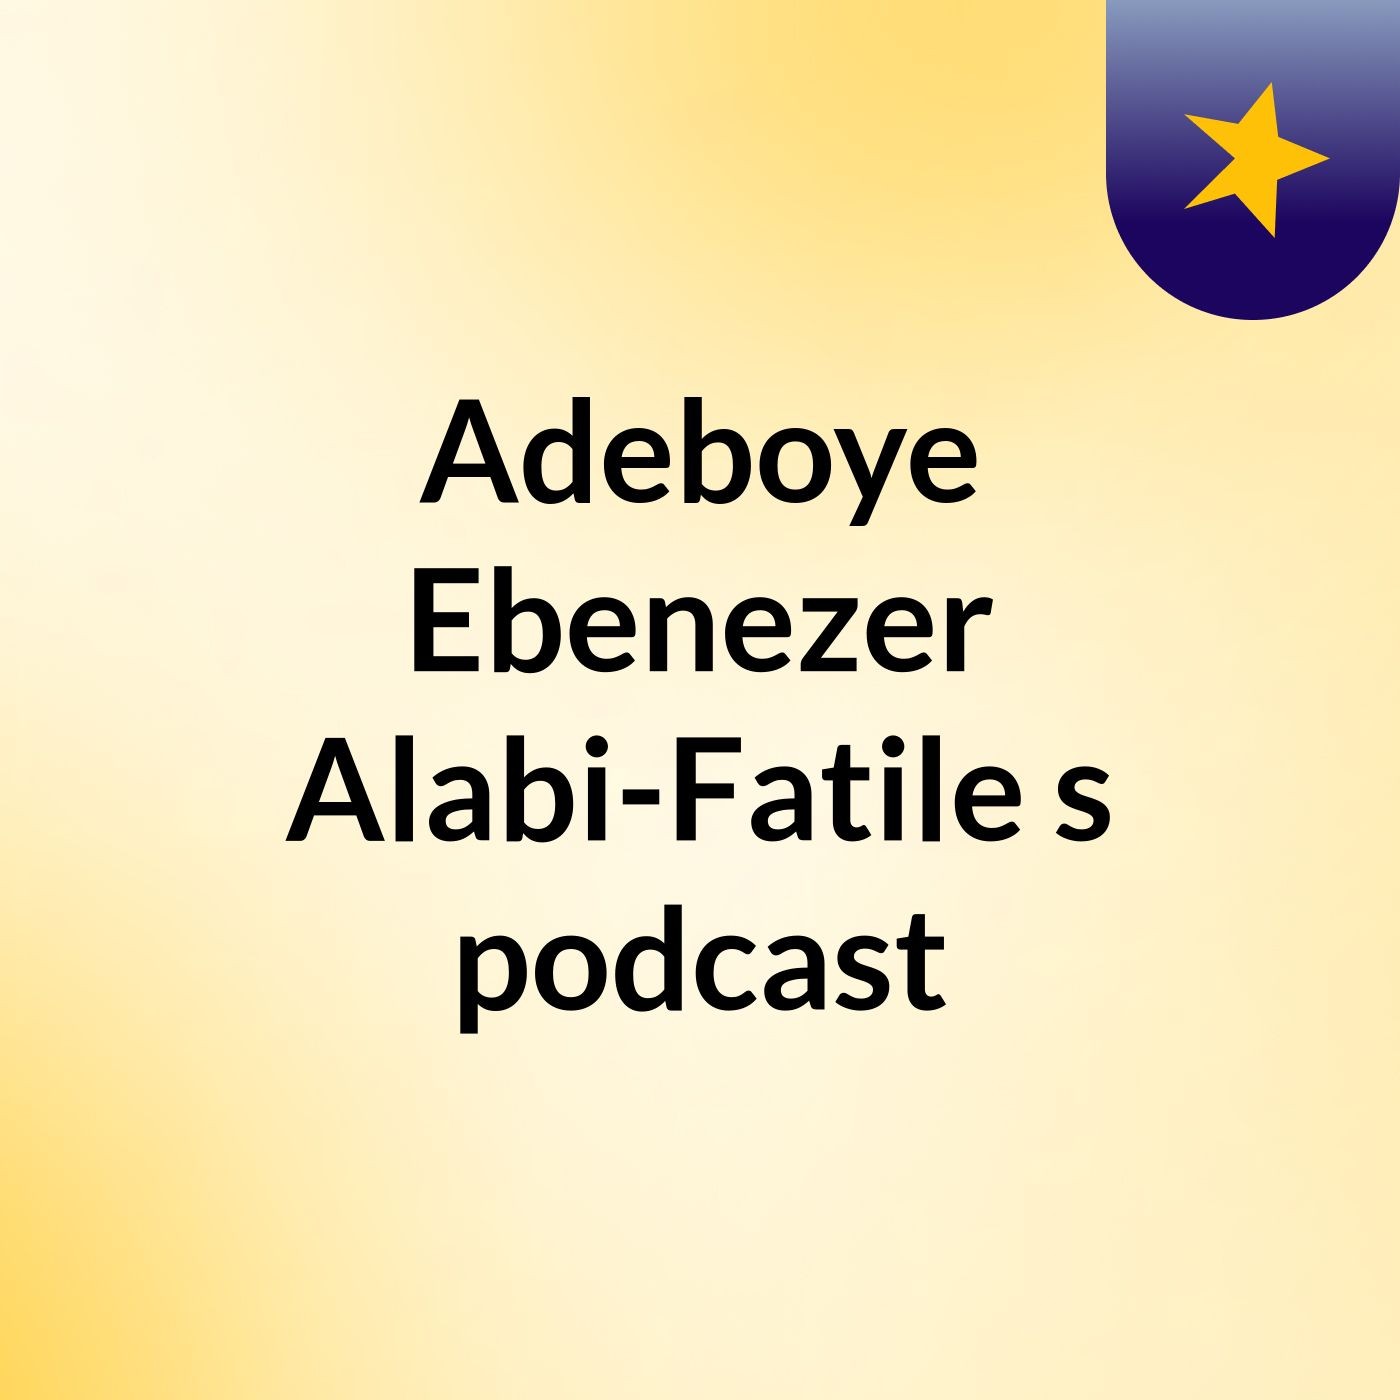 Episode 6 - Being Trustworthy by Adeboye Ebenezer Alabi-Fatile